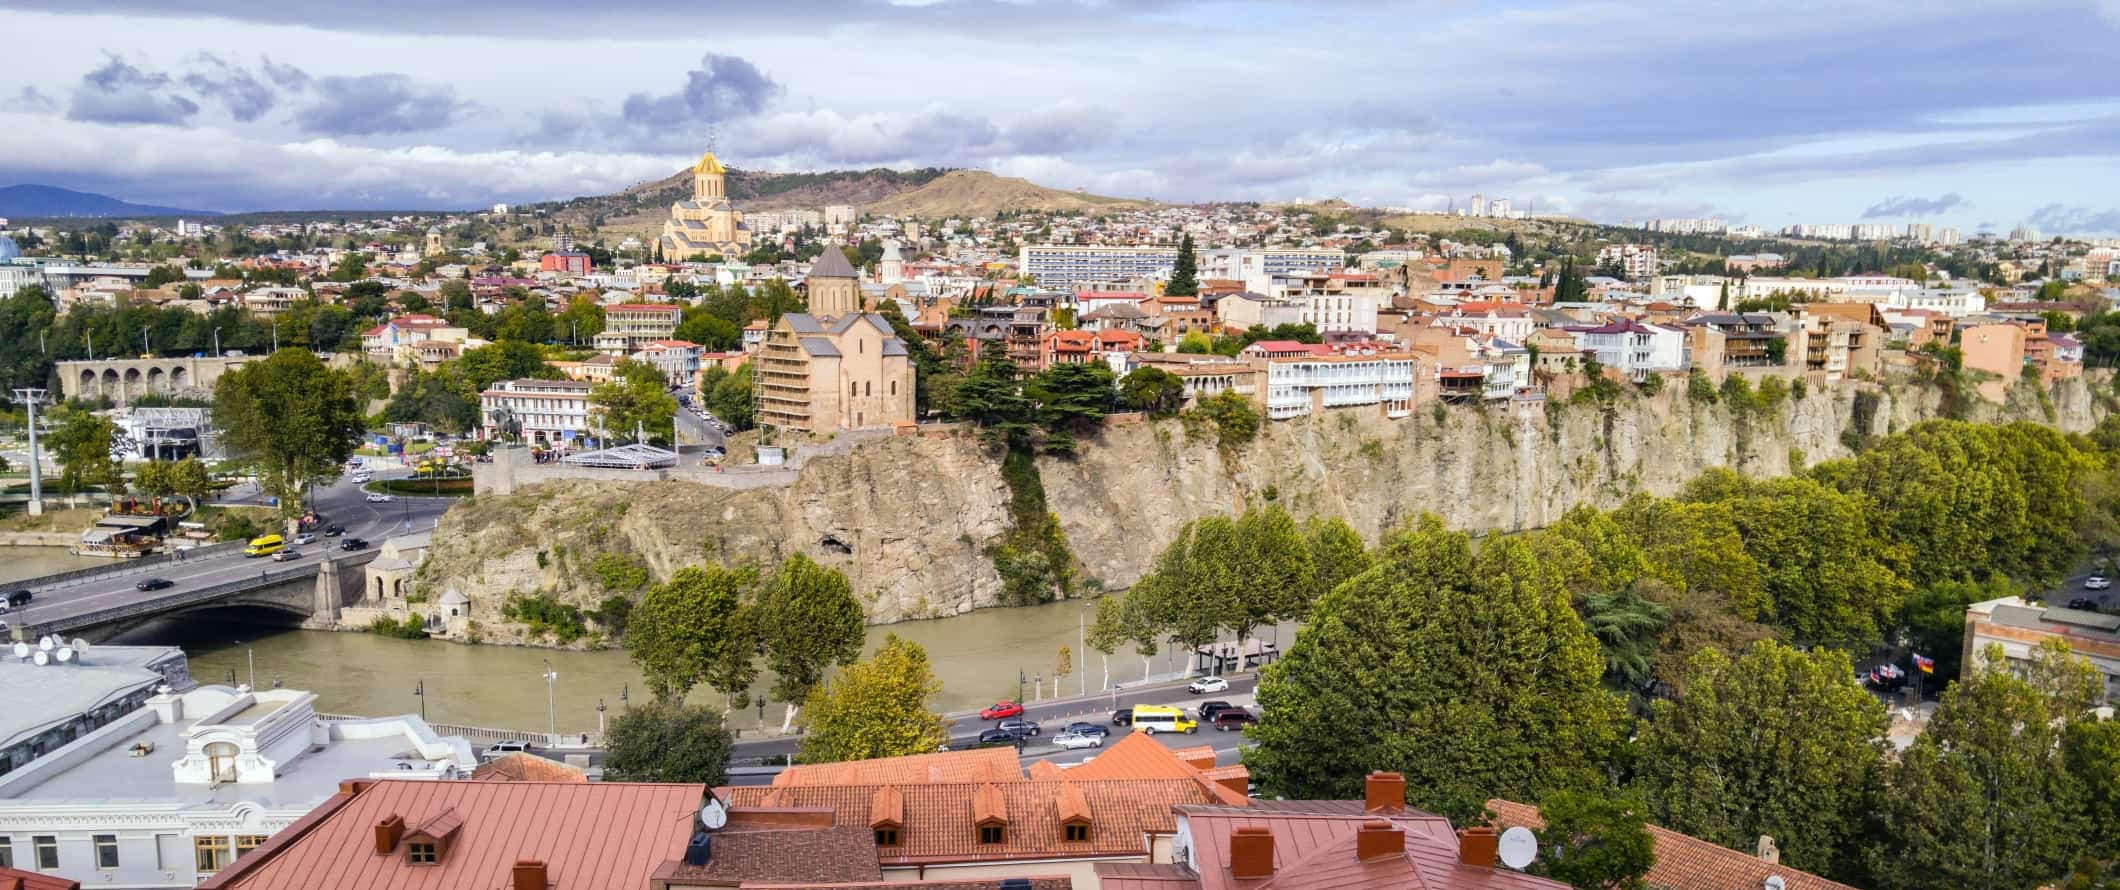 Vista panorâmica da cidade de Tbilisi, Geórgia